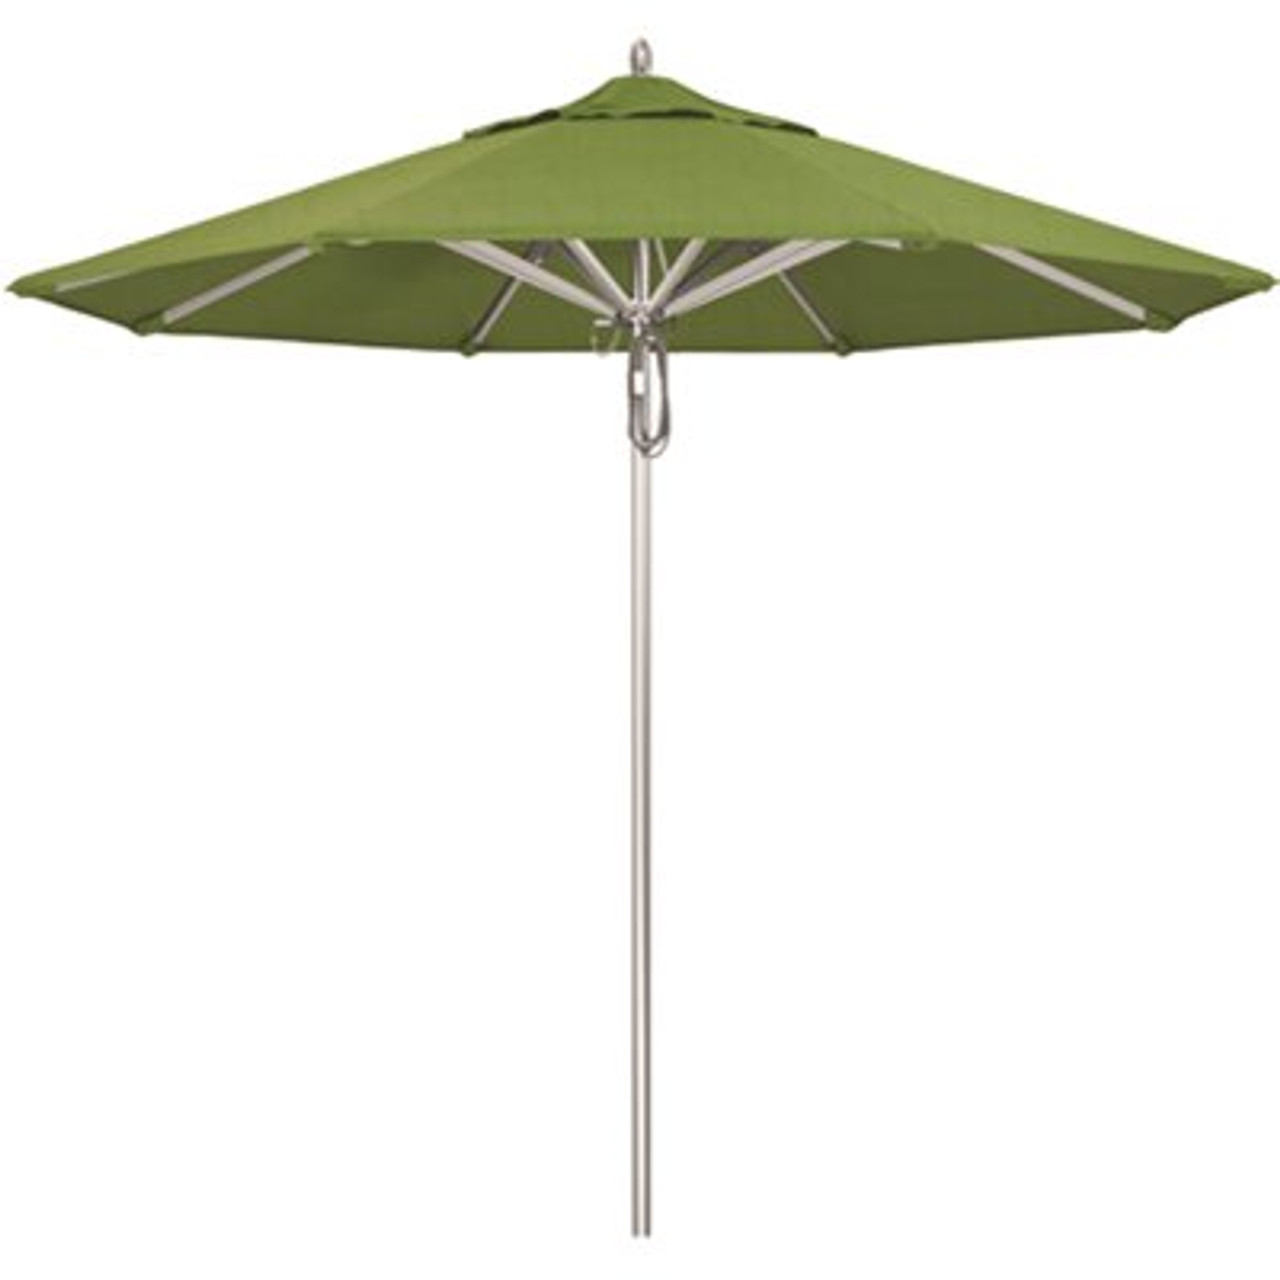 California Umbrella 9 ft. Silver Aluminum Commercial Market Patio Umbrella with Pulley Lift in Specturm Cilantro Sunbrella